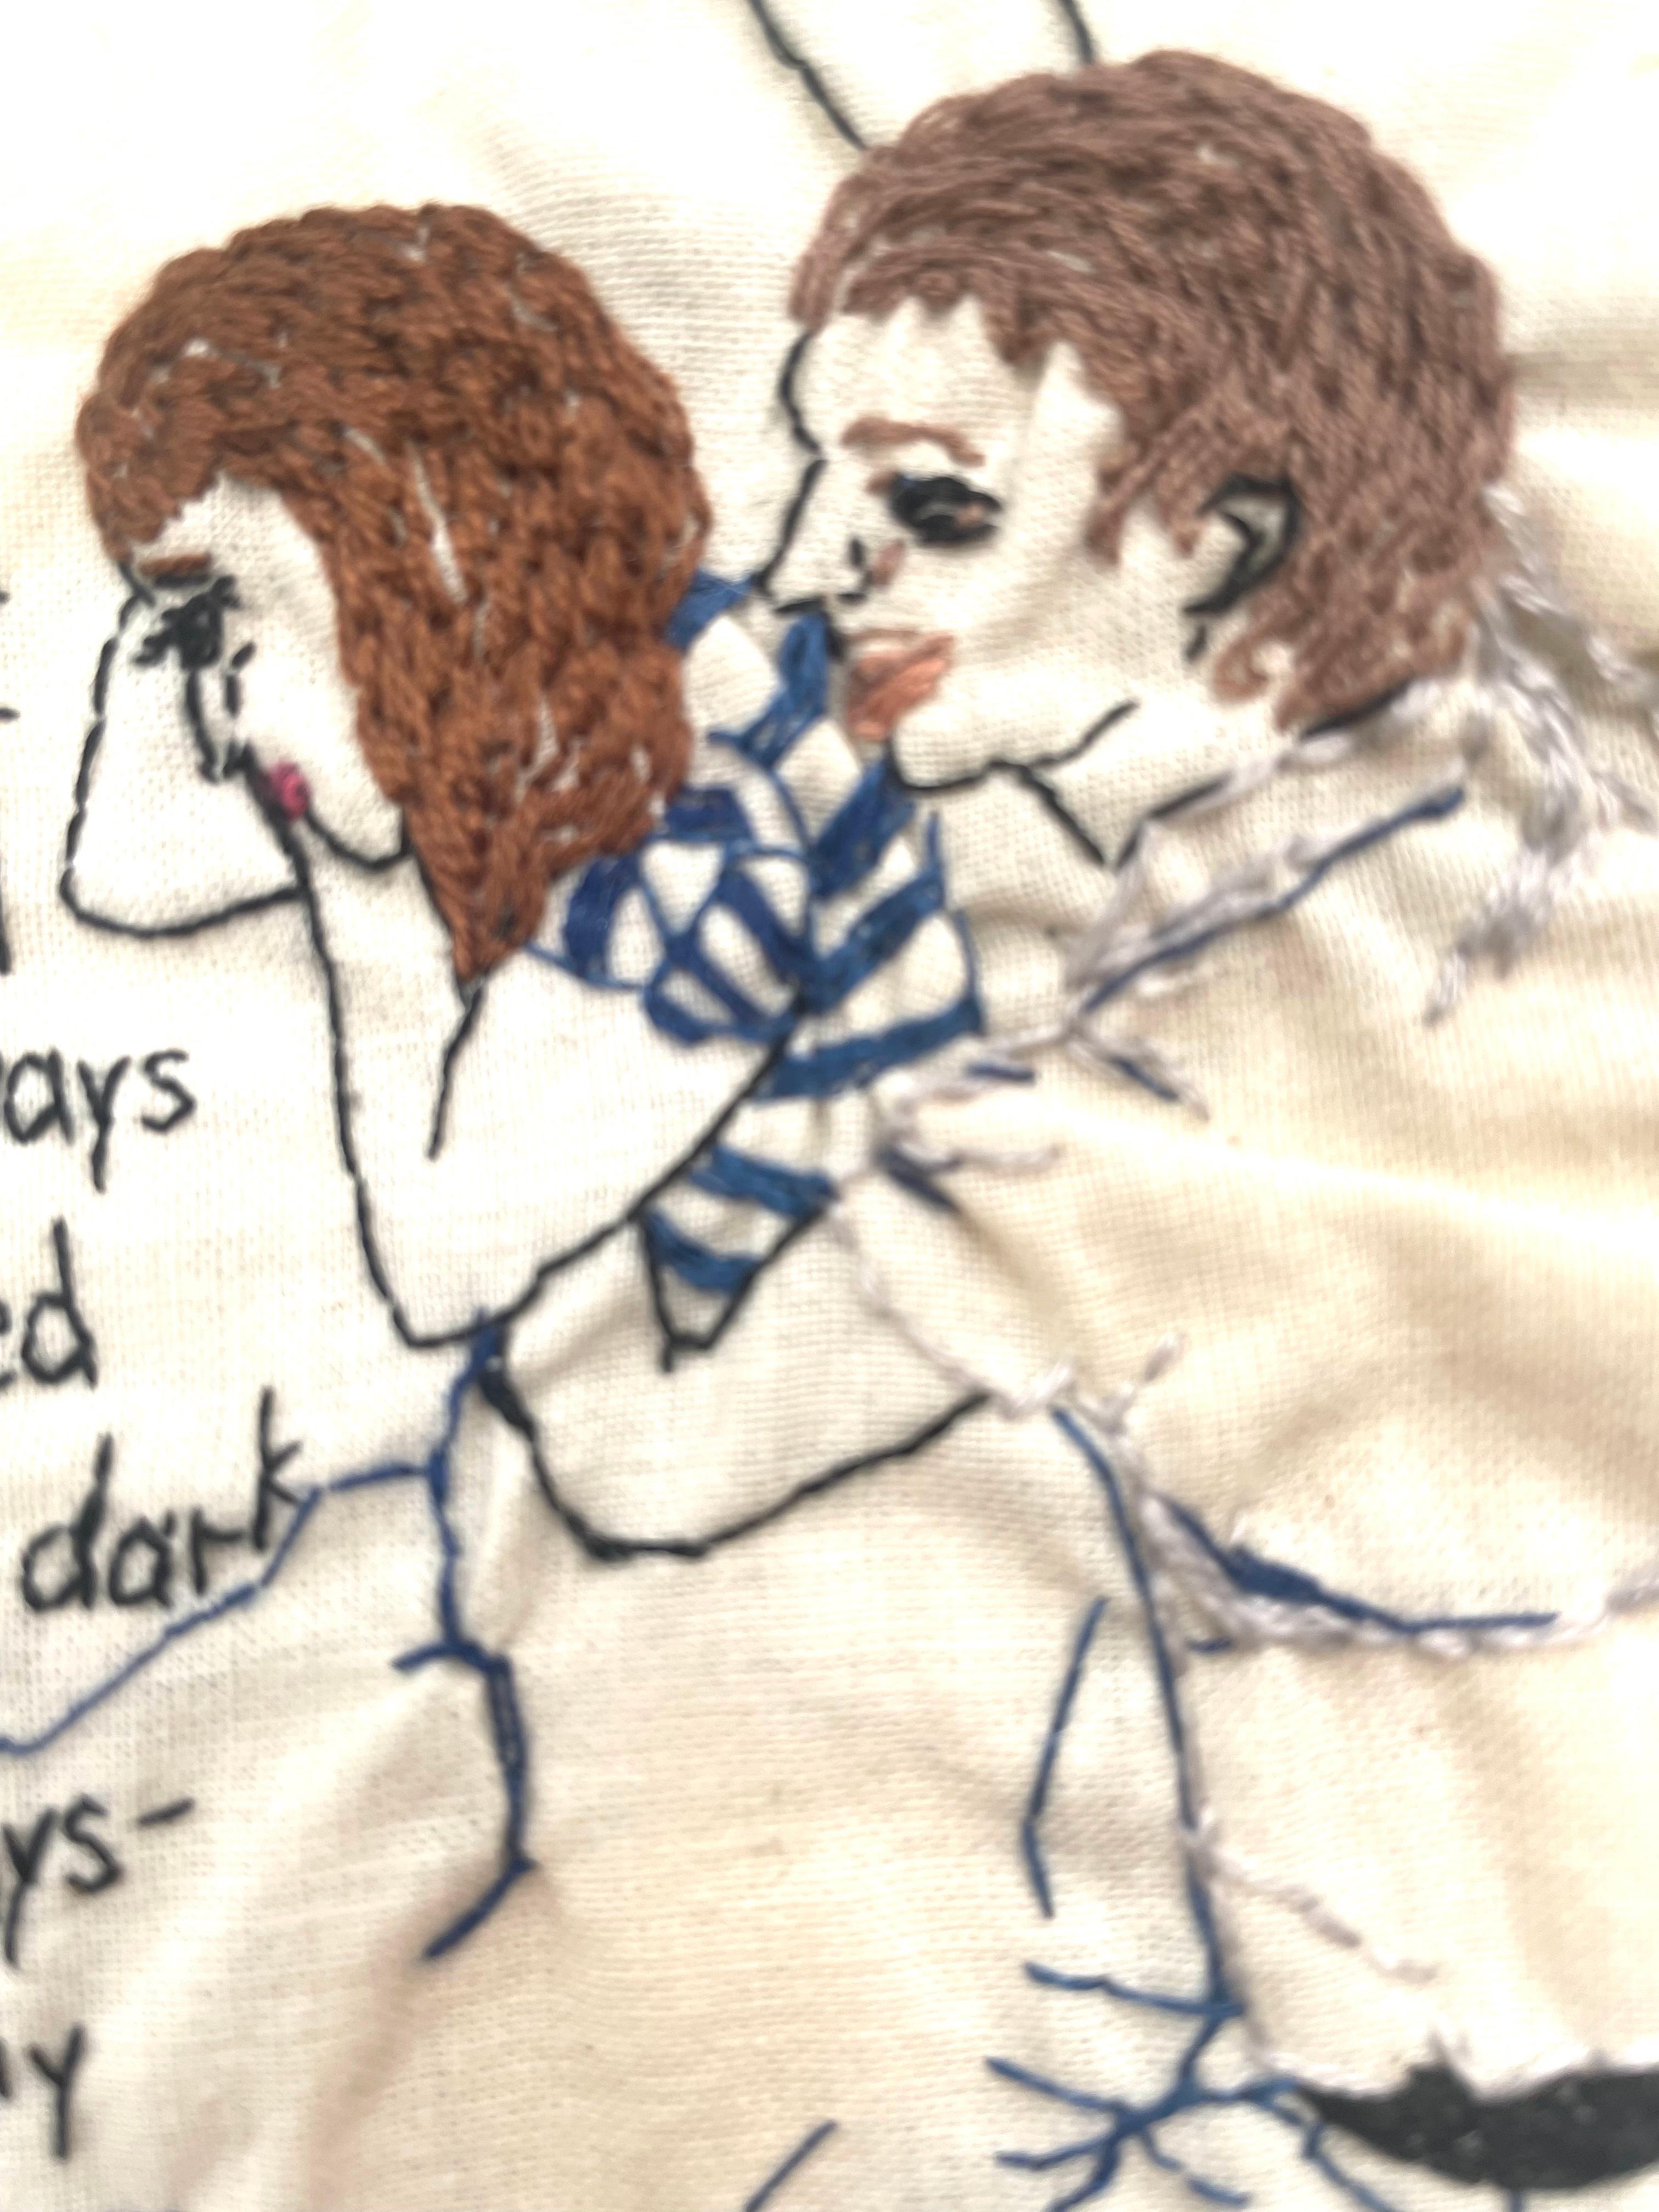 I always liked Jewish guys - narrative love couple  embroidery on fabric - Contemporary Mixed Media Art by Iviva Olenick